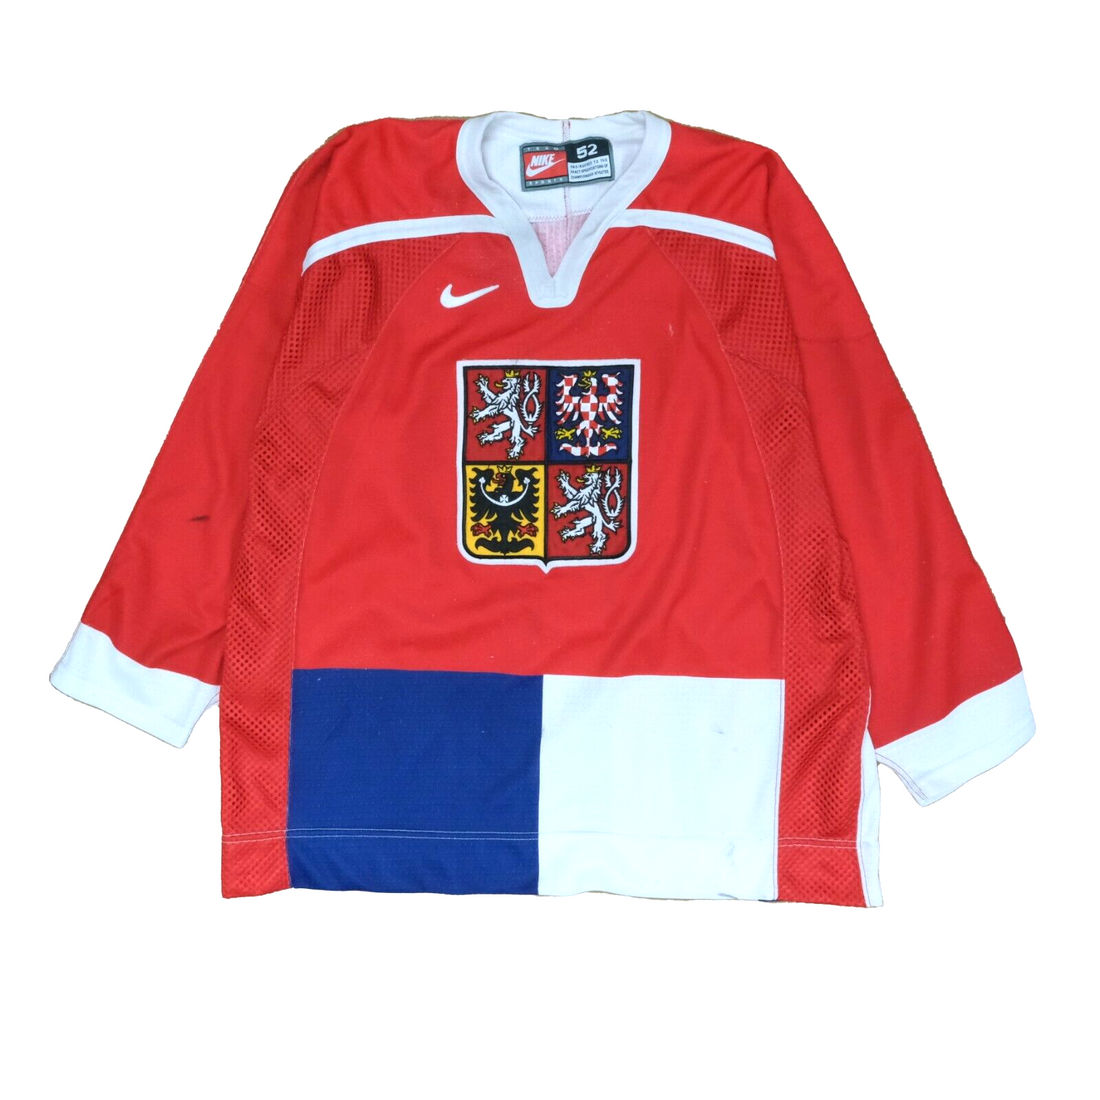 Vintage Czech Republic Authentic National Hockey Team Nike Jersey Size 52 IIHF